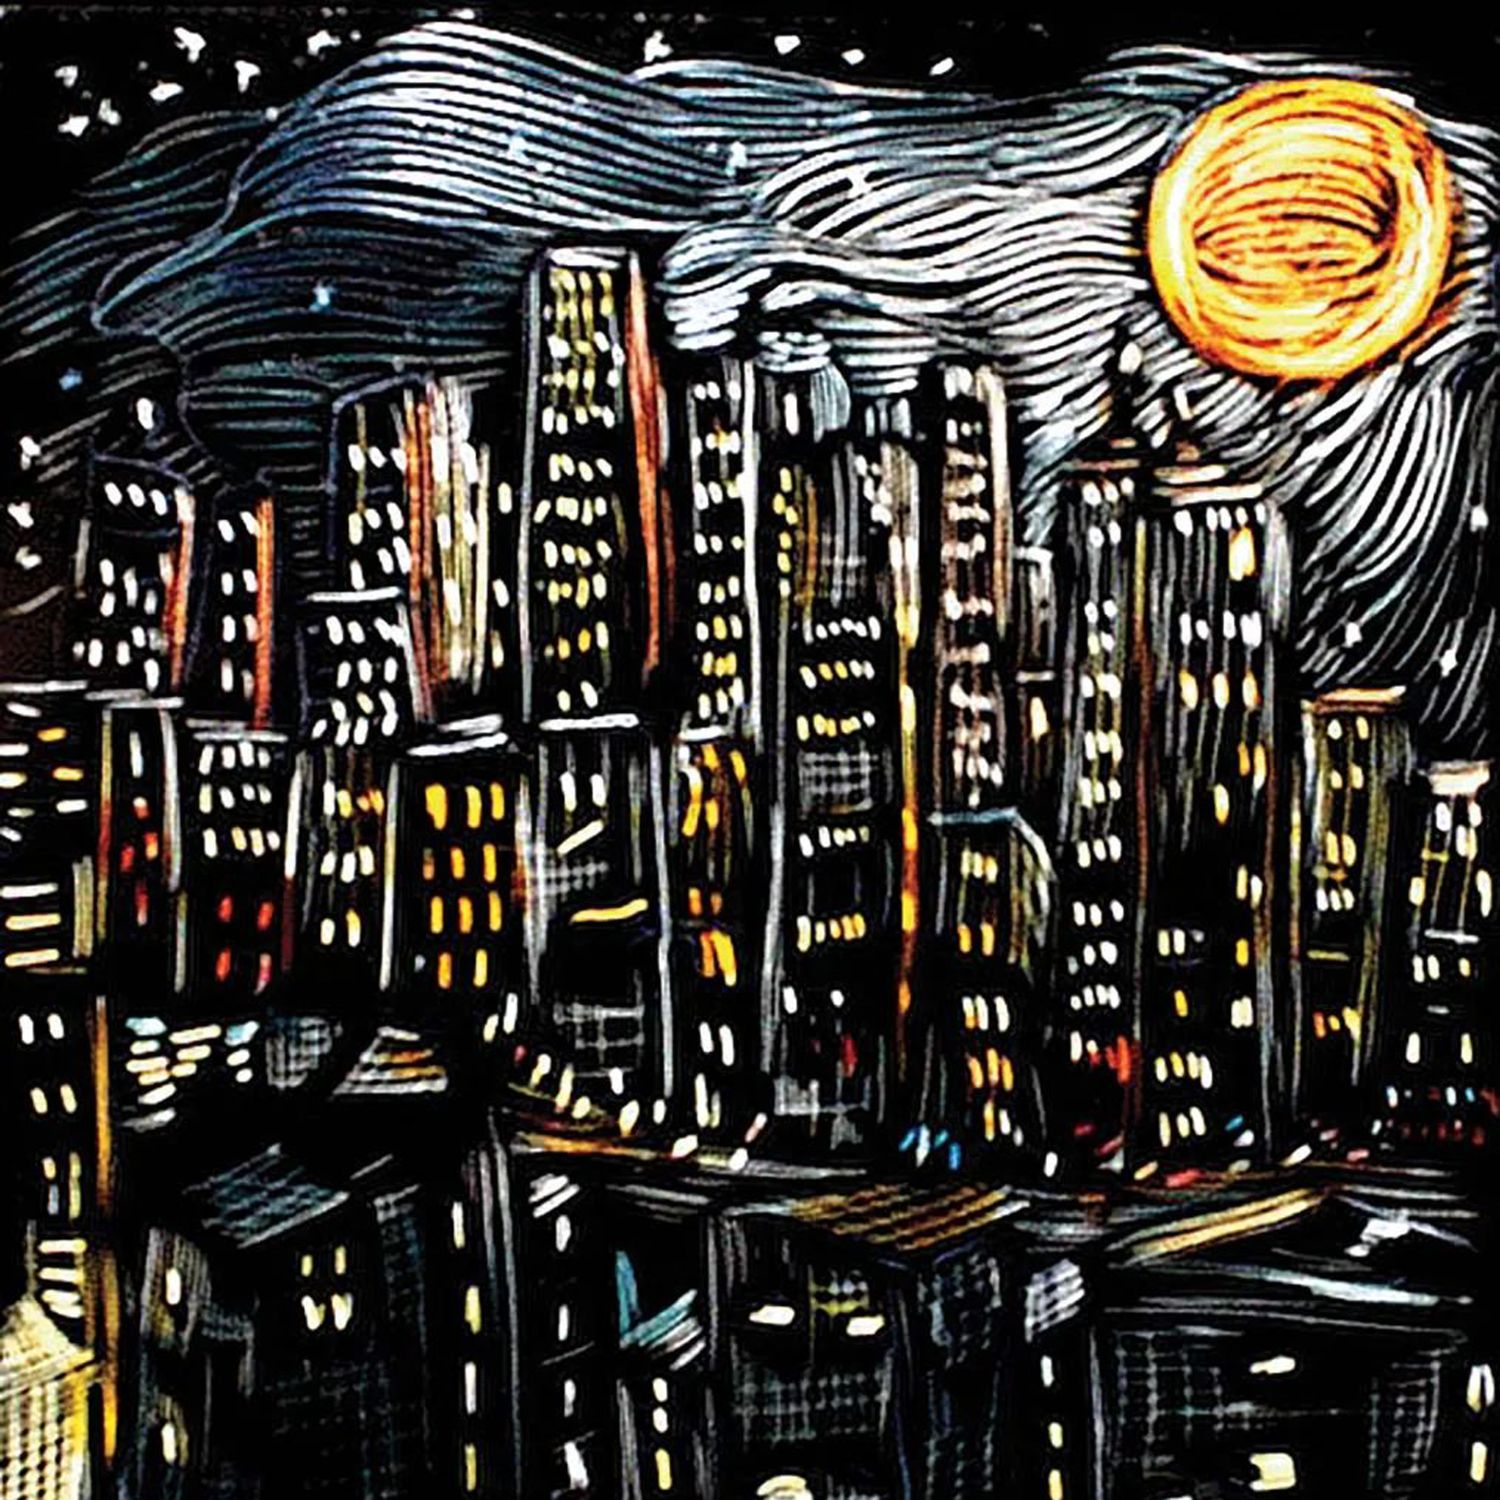 Lisa Martini-Dunk: City Moon – Notecard Product Image 1 of 2